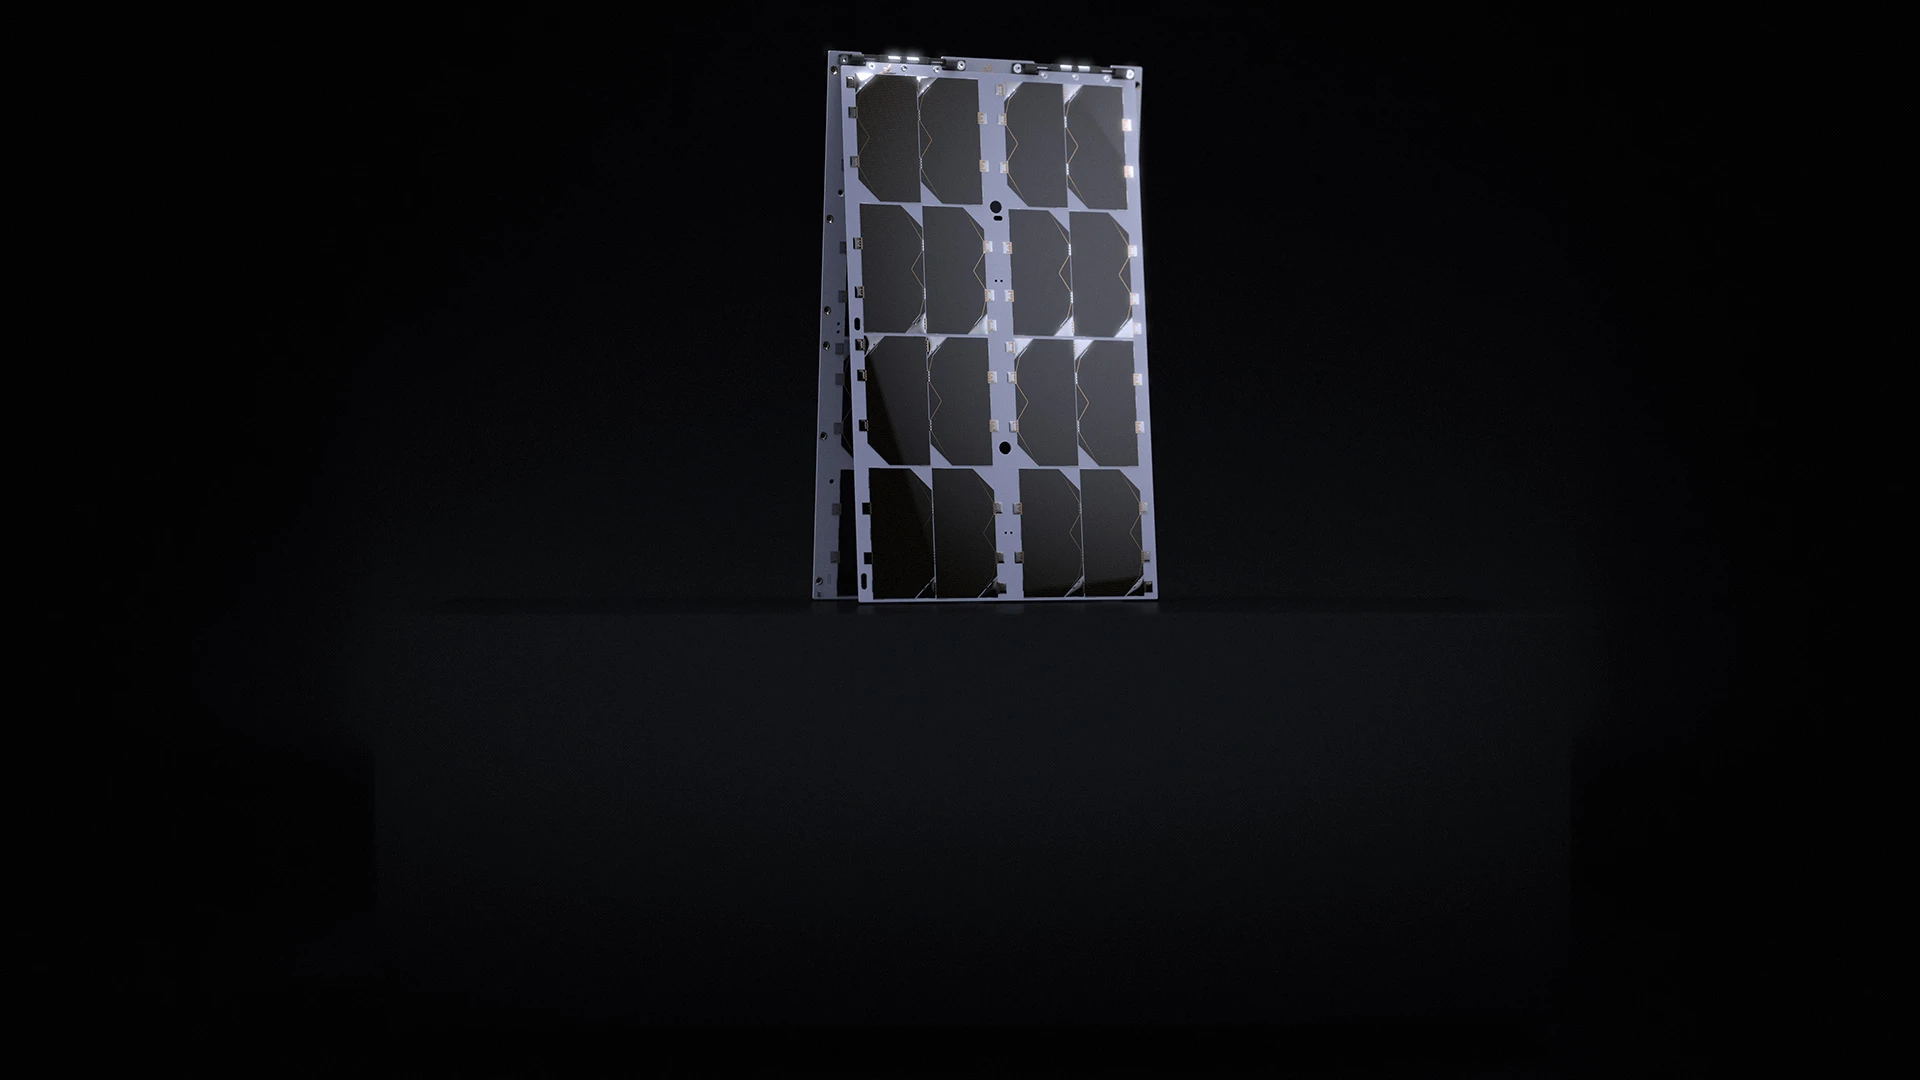 6U Deployable Solar Array web render 1